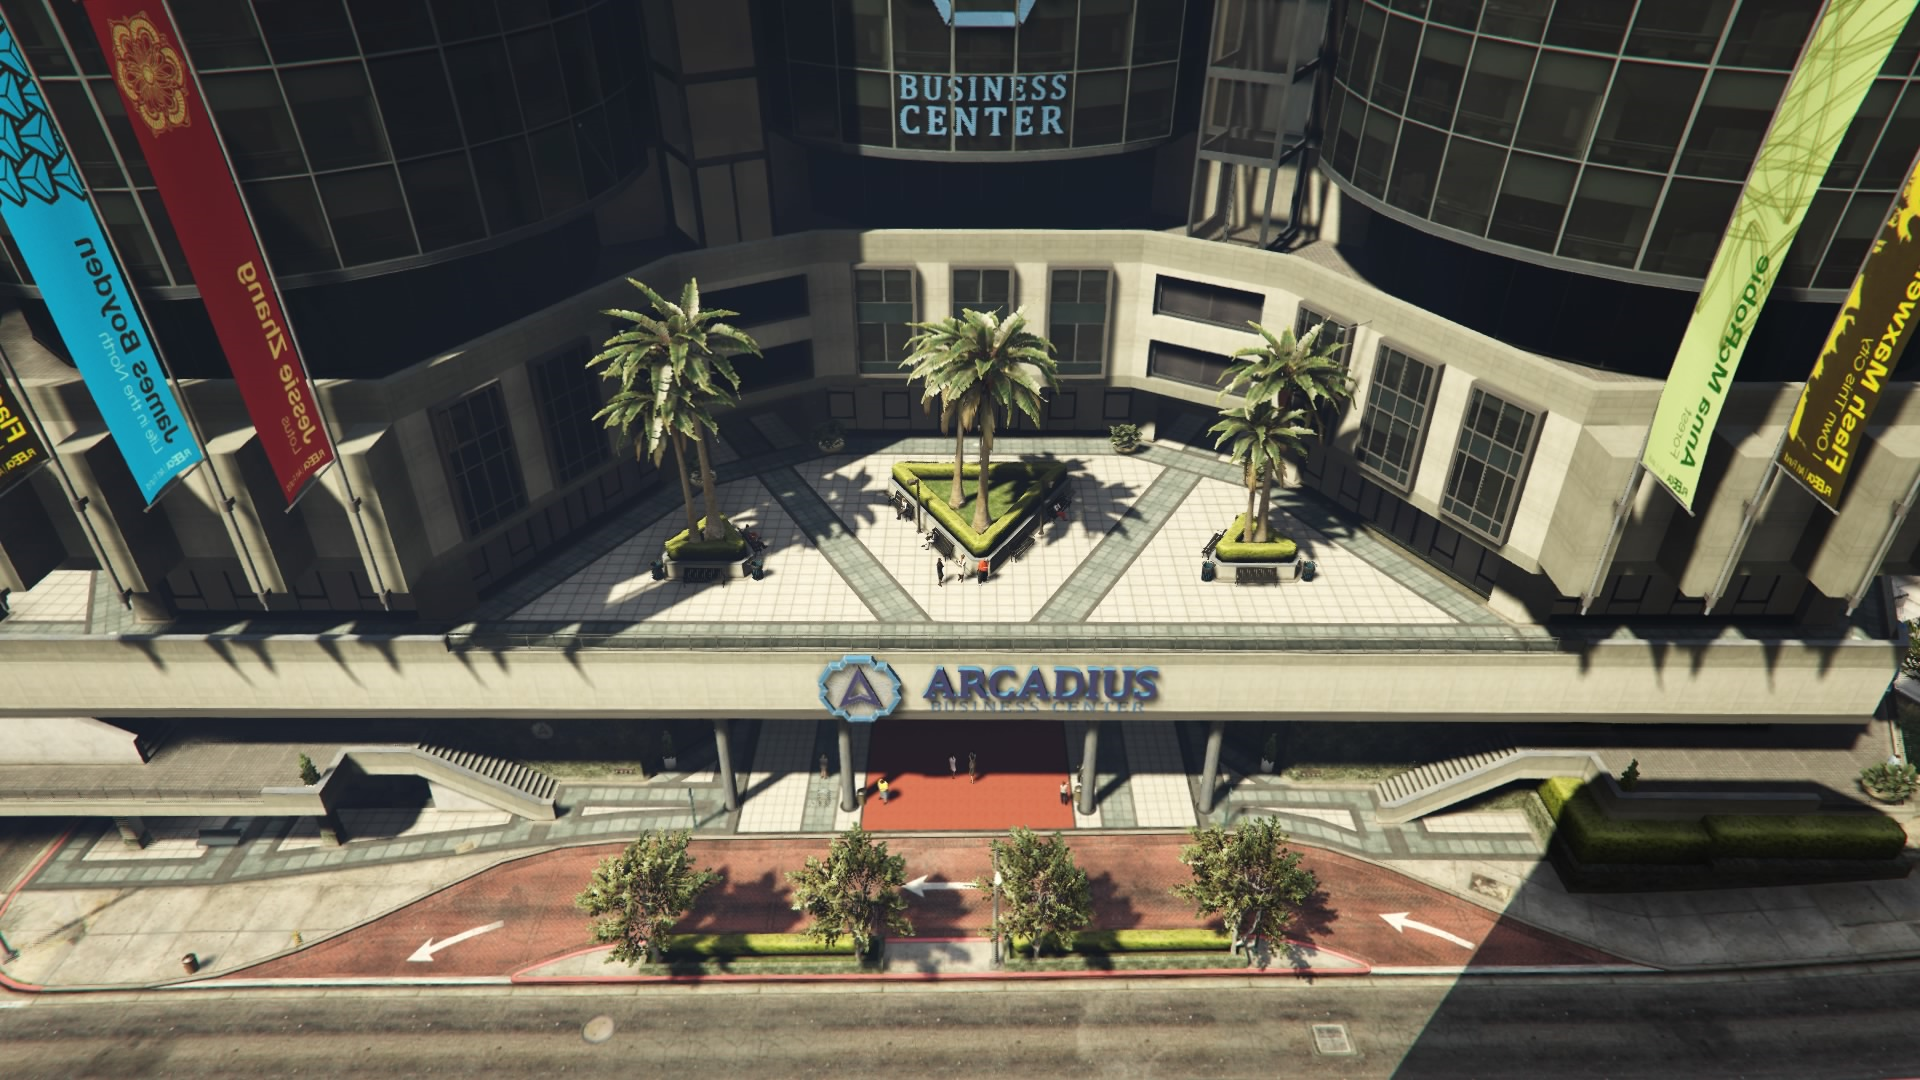 Arcadius business center gta 5 фото 2